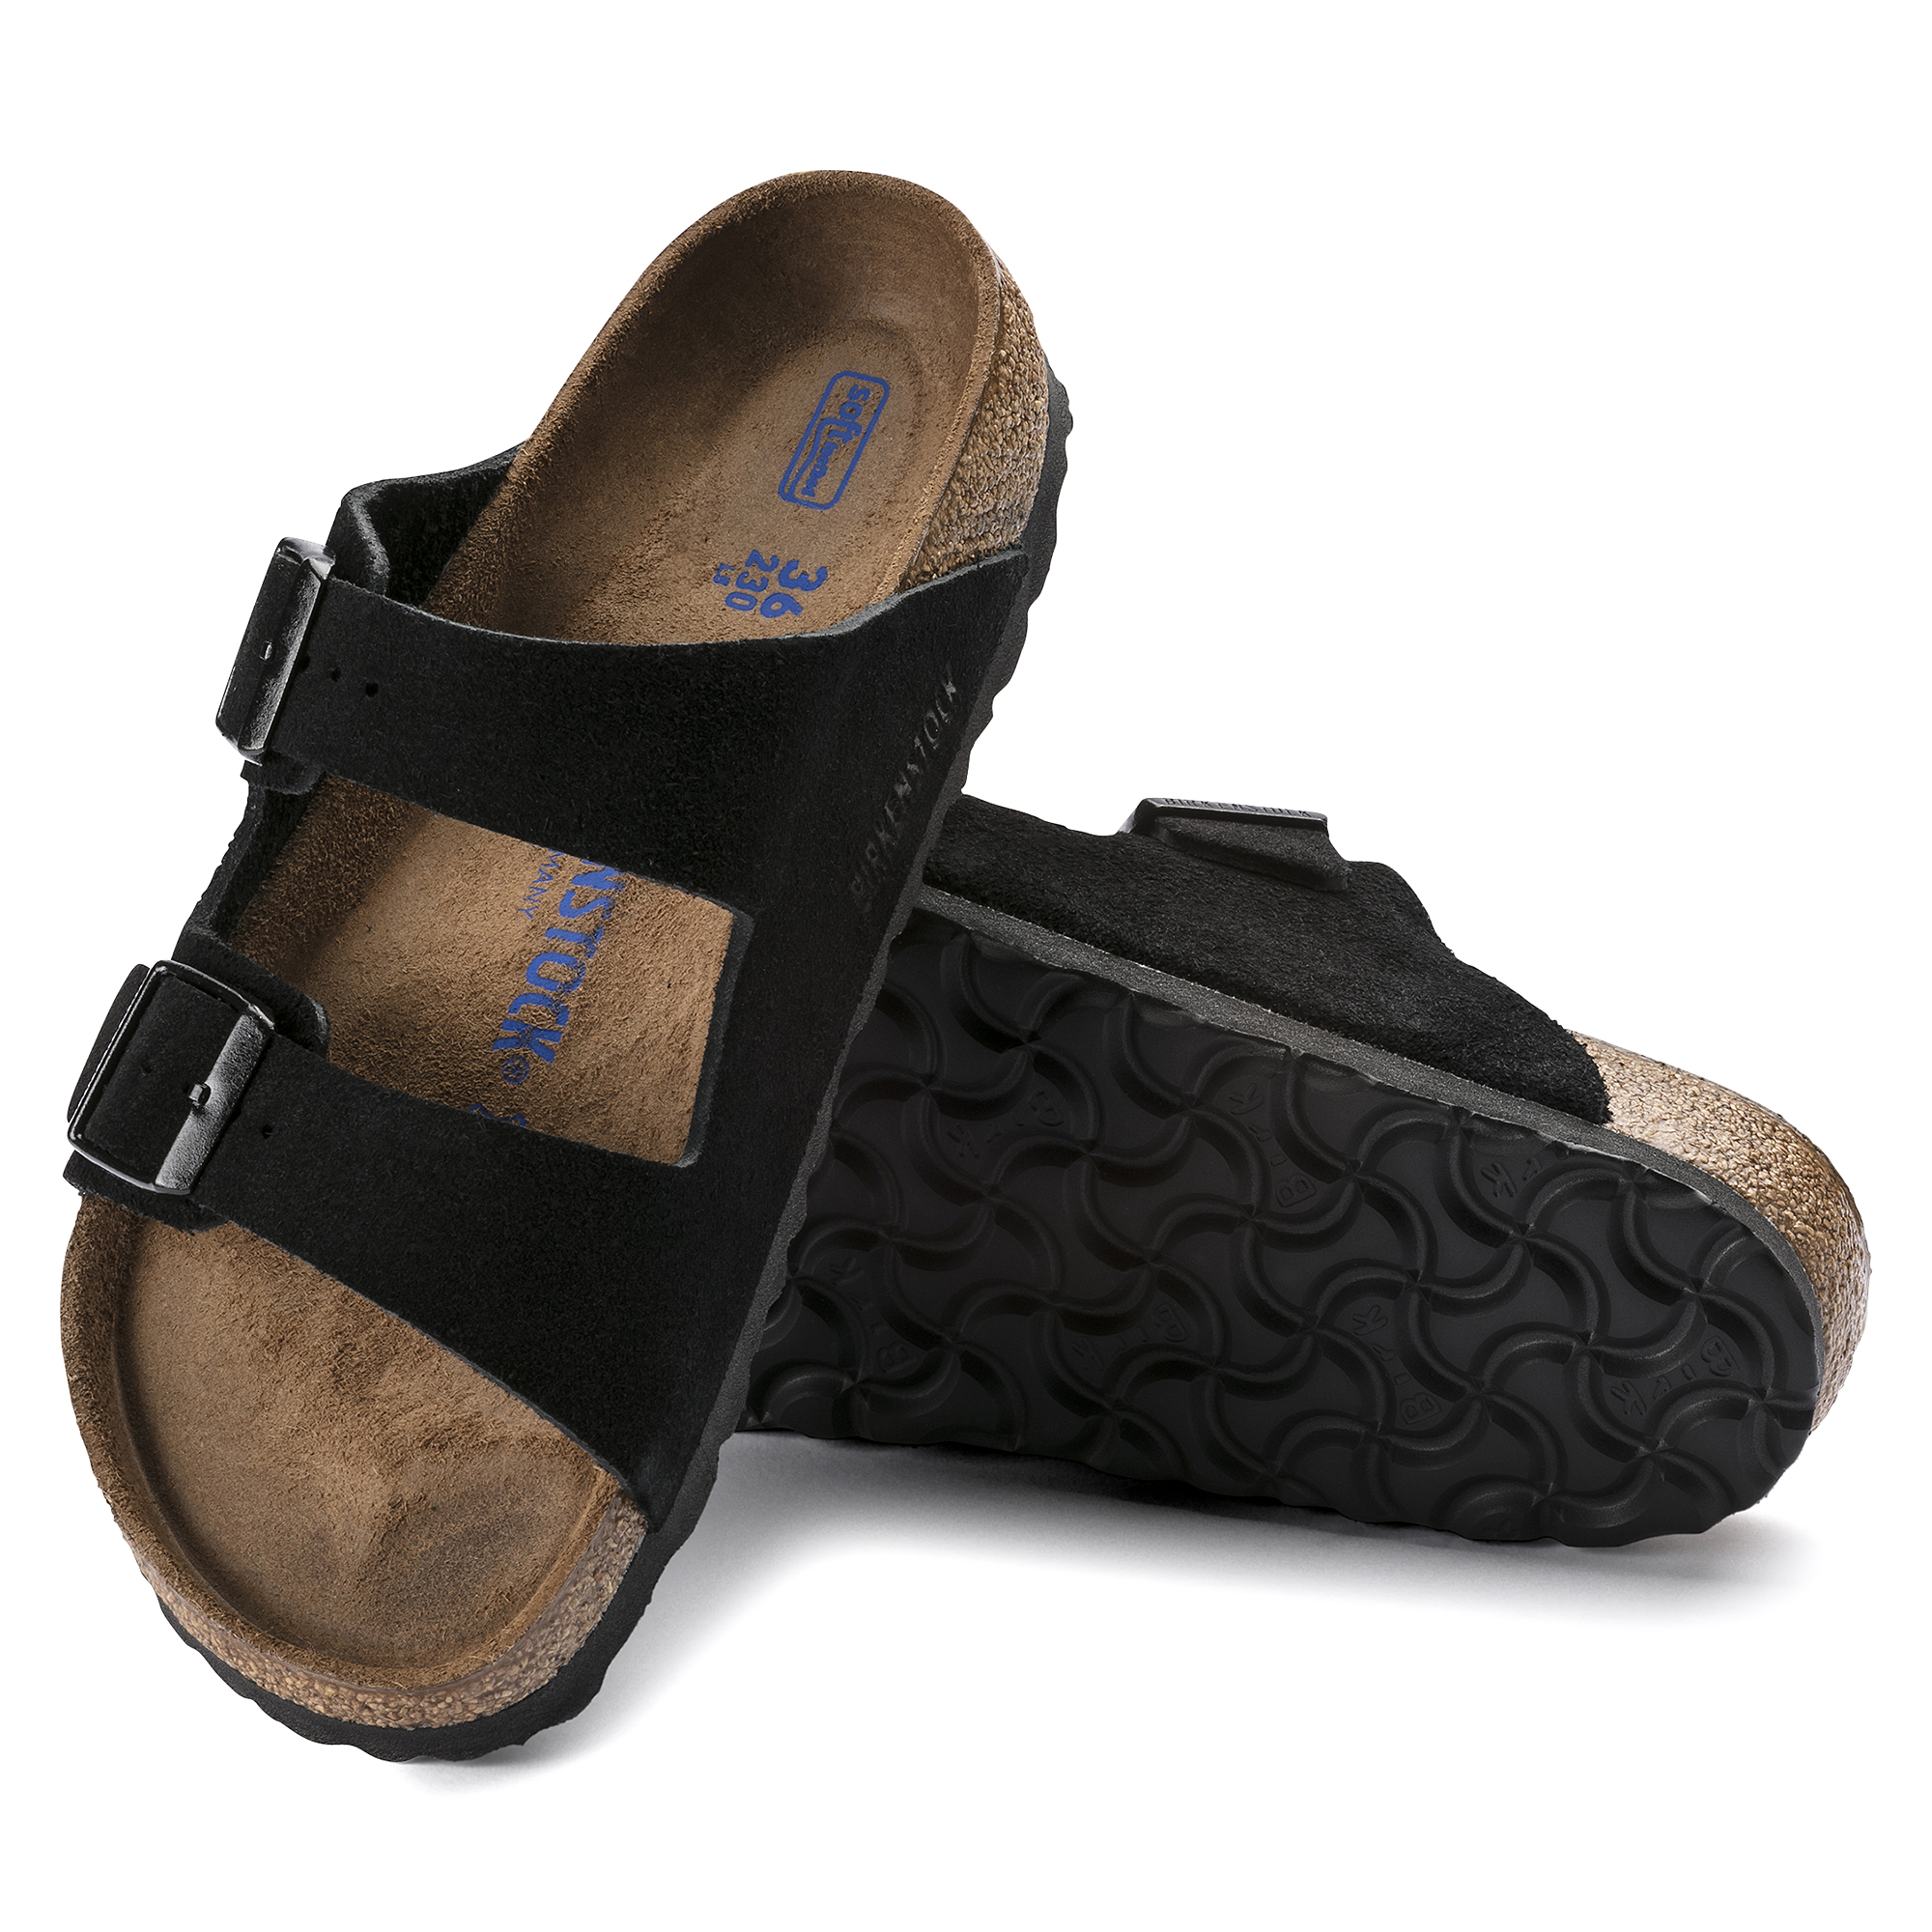 BIRKENSTOCK Arizona Black Leather Suede Sandals sz 40 EU, Women's 9 US